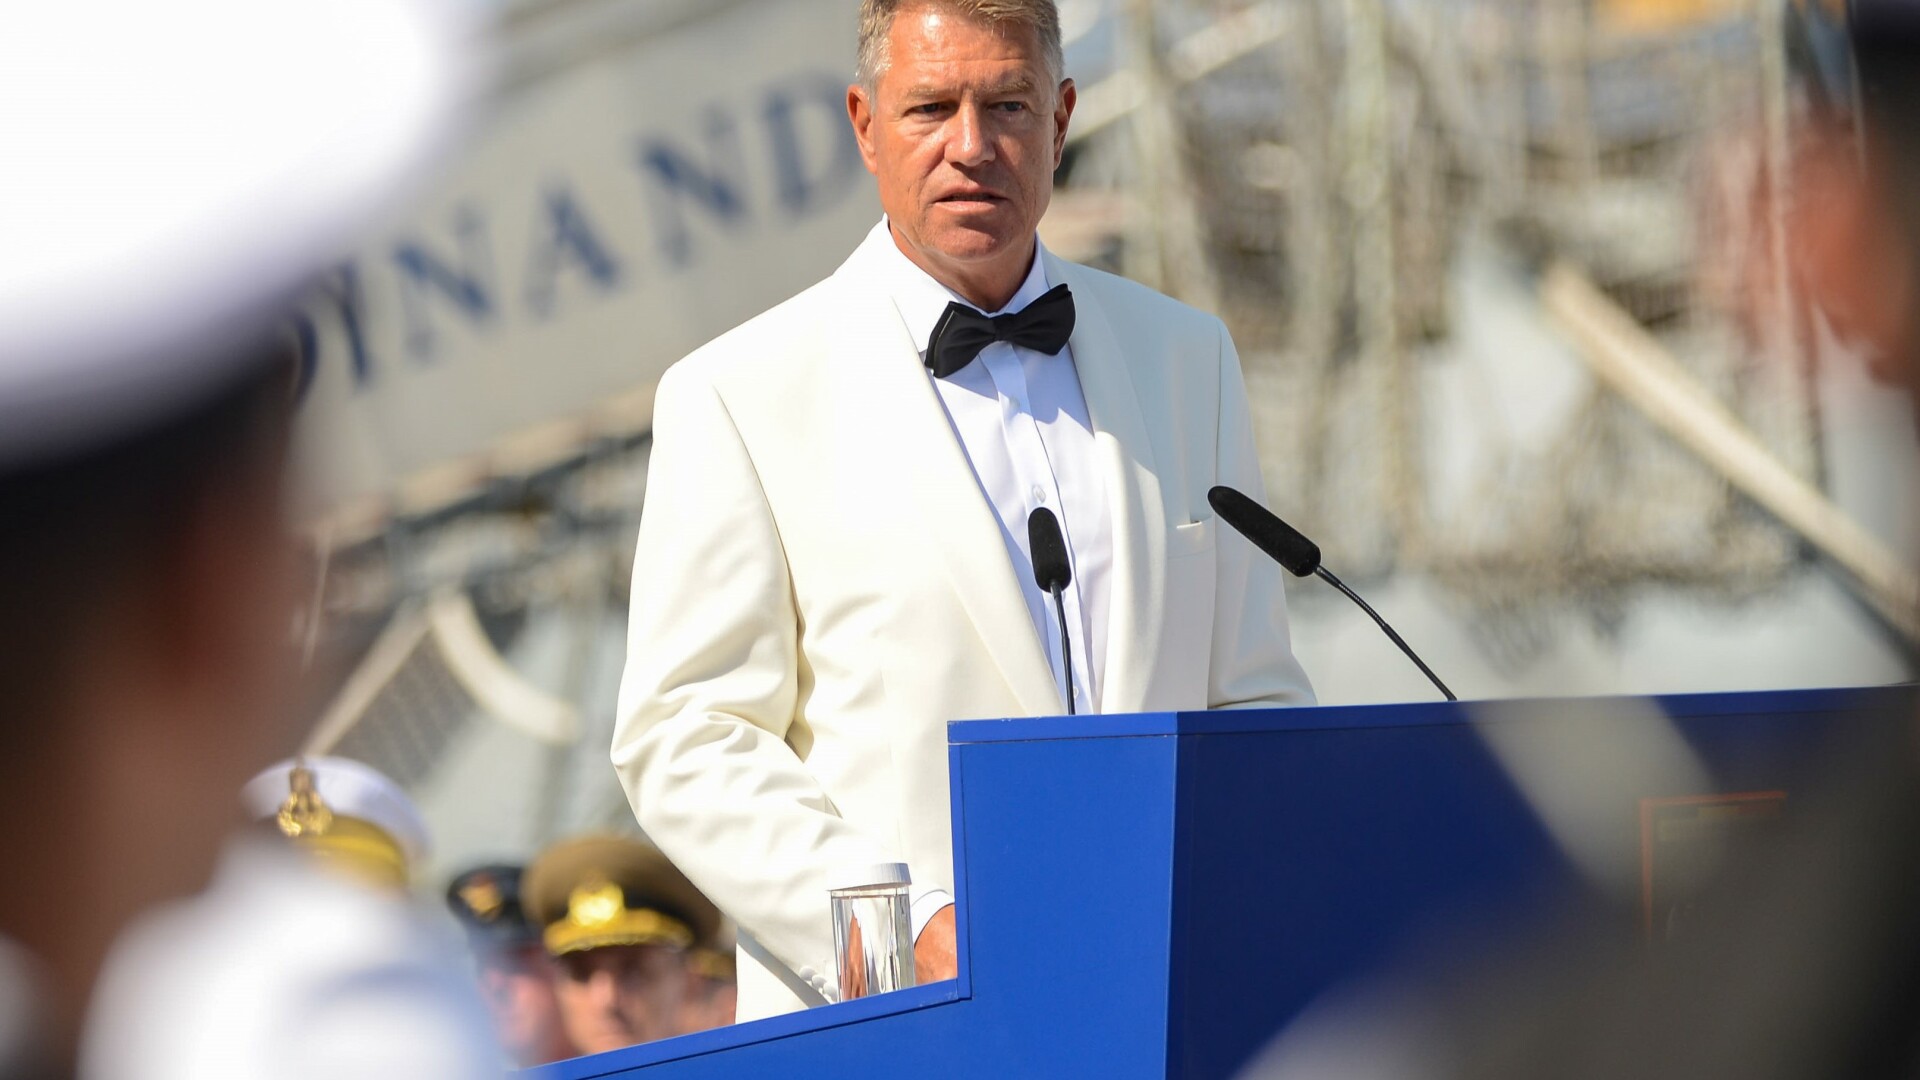 Klaus Iohannis